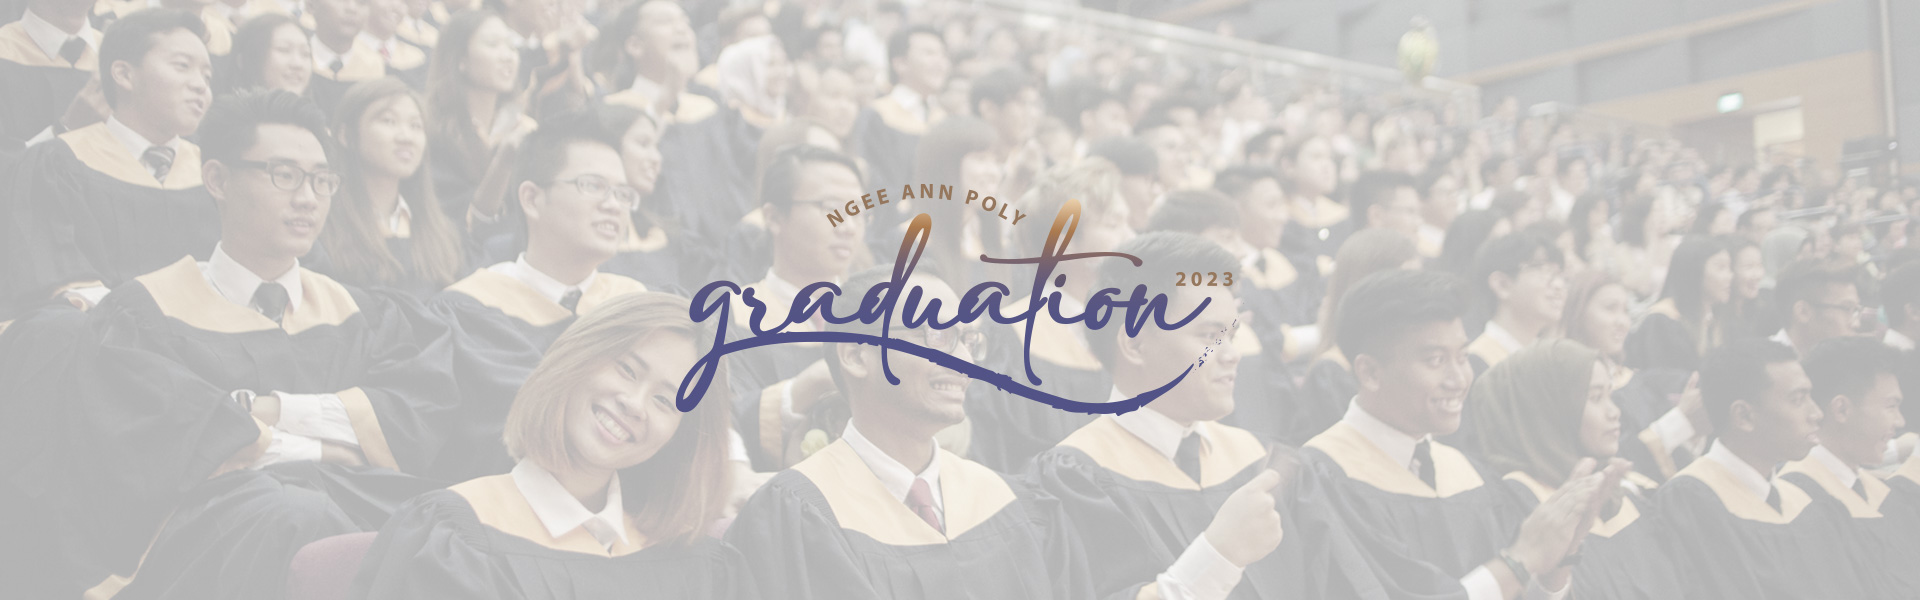 Ngee Ann Poly Graduation 2023